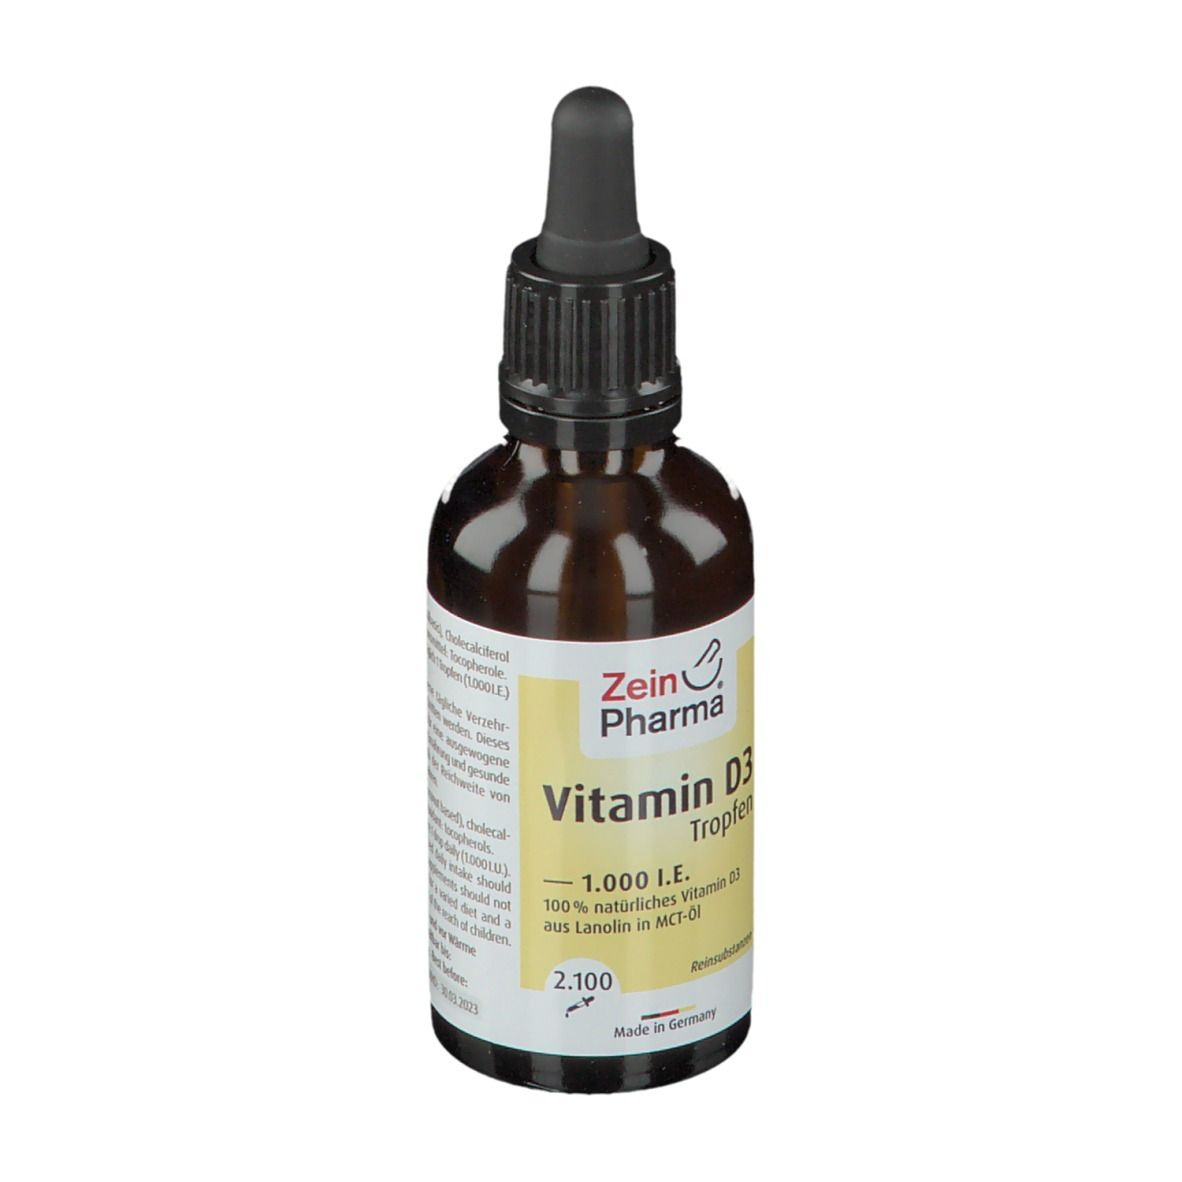 ZeinPharma® Vitamin D3 Tropfen 1.000 I.E.